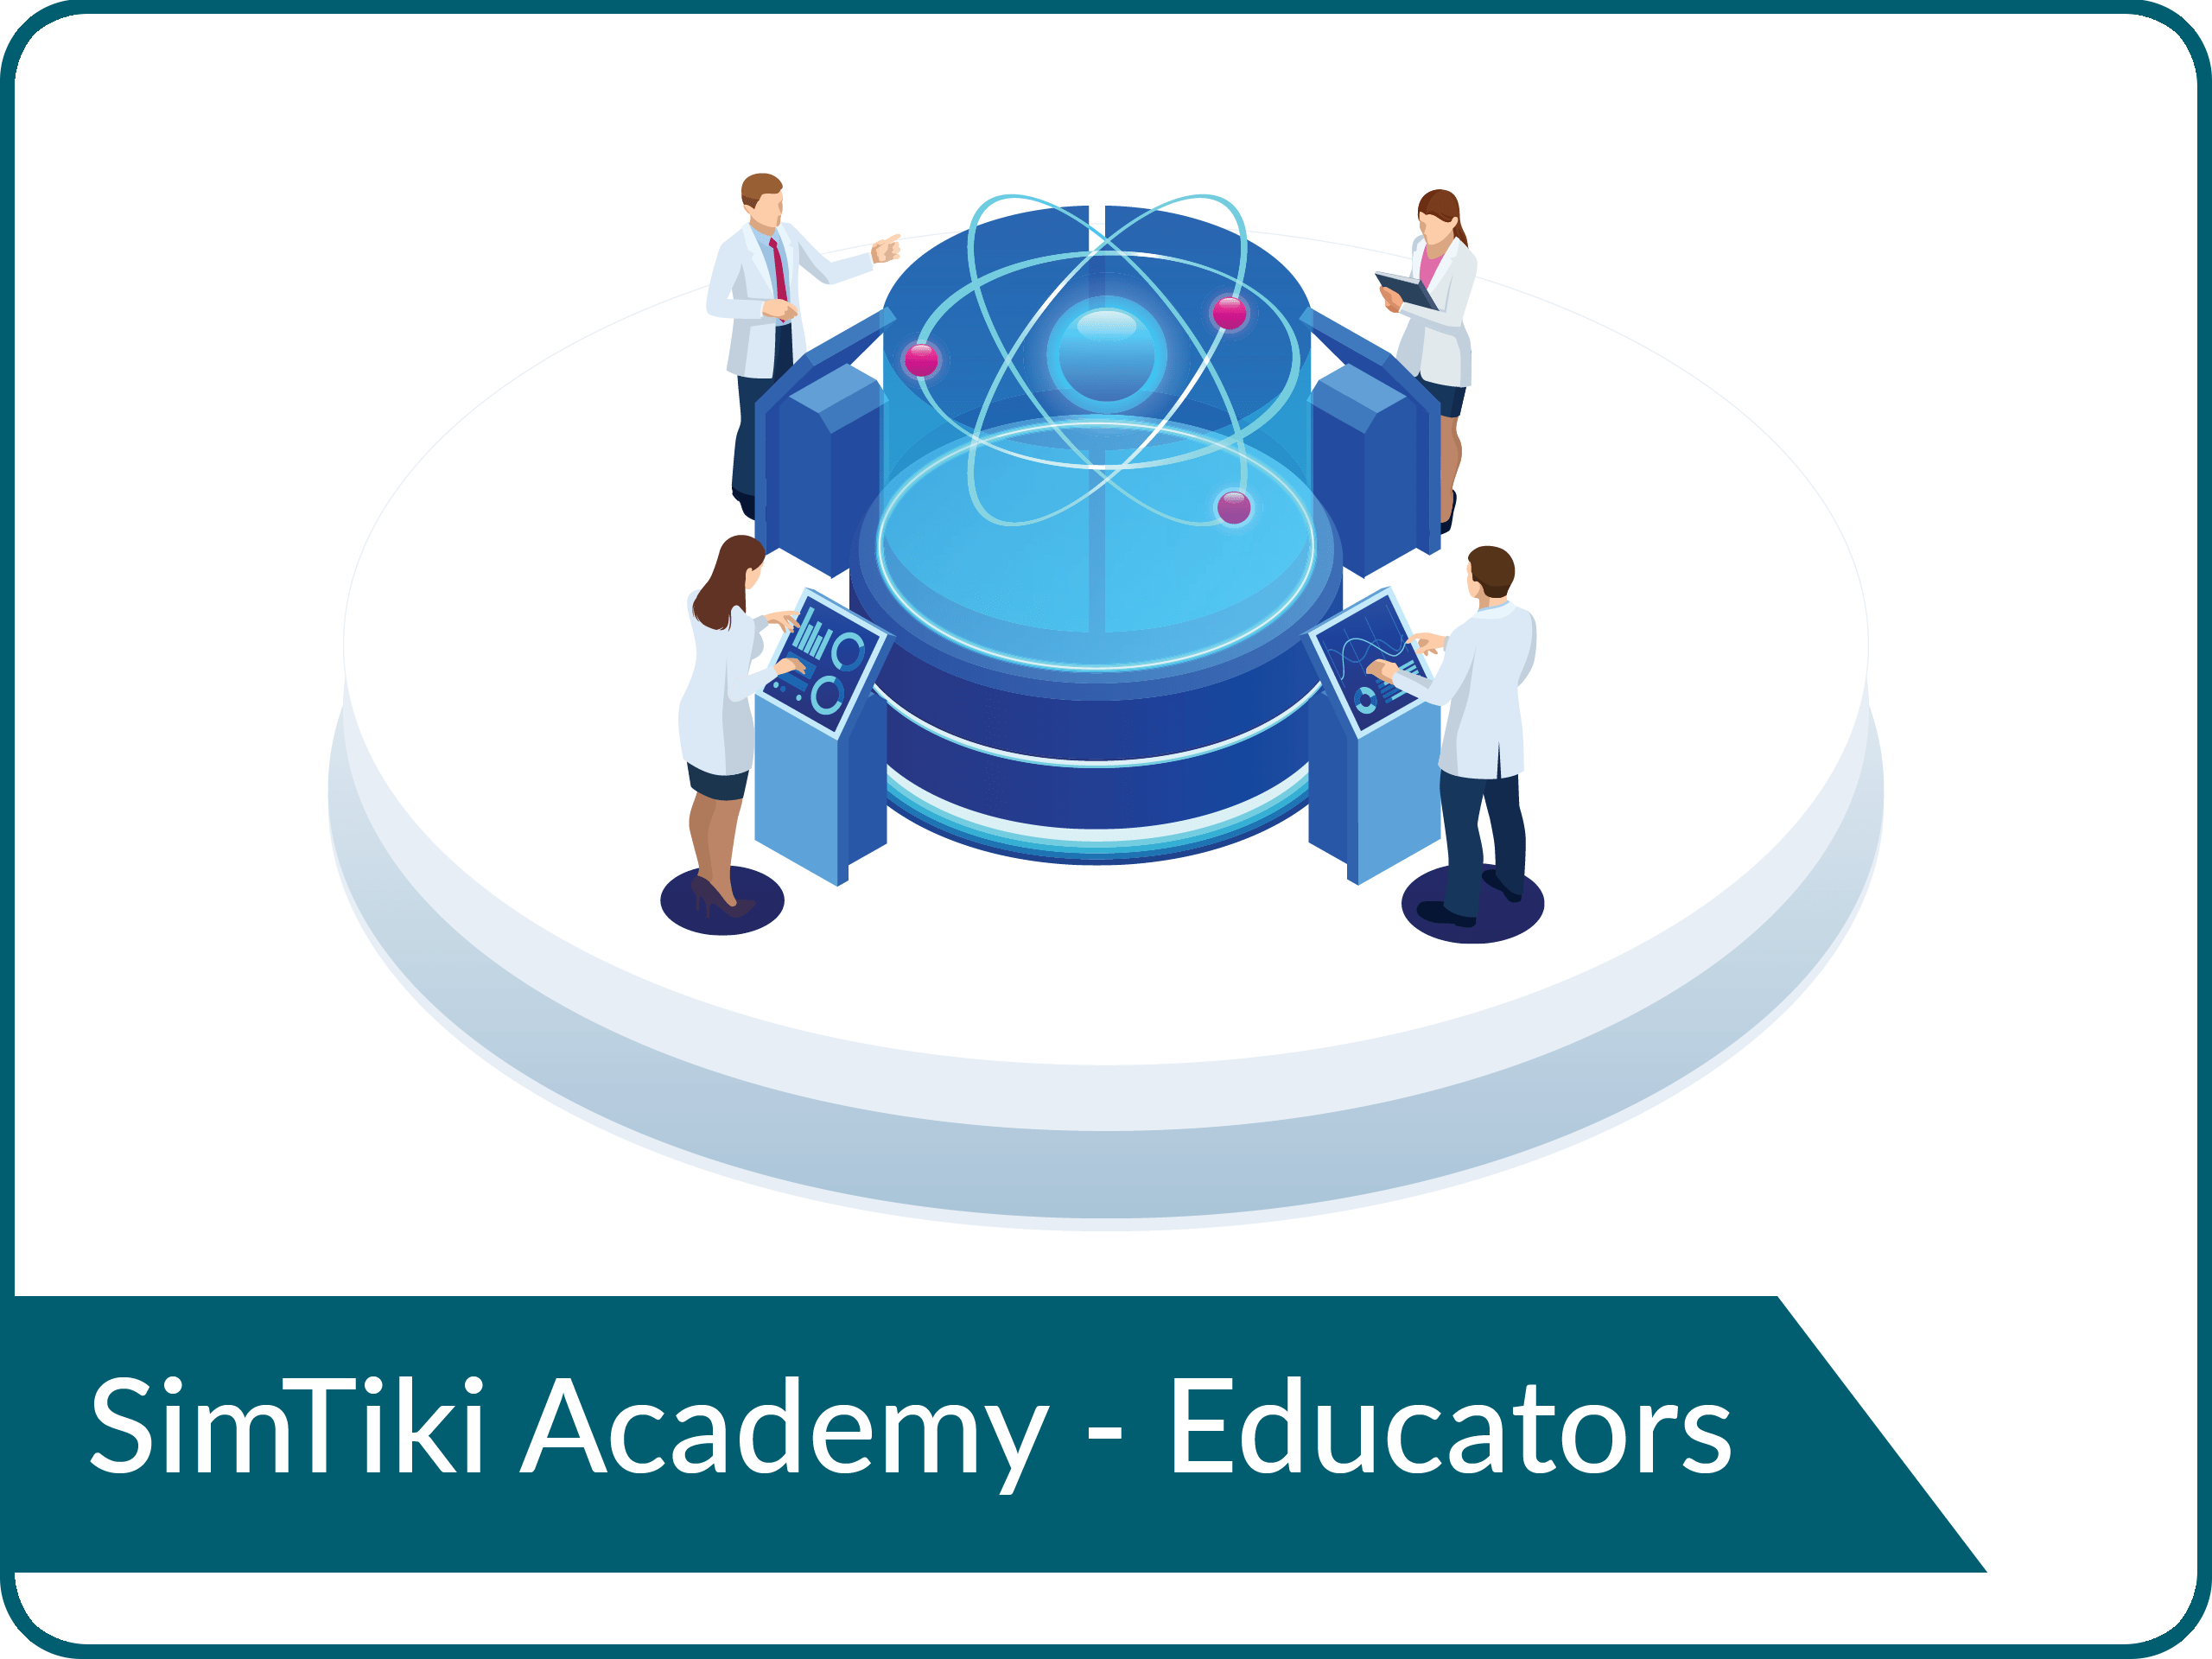 simtiki academy educators logo